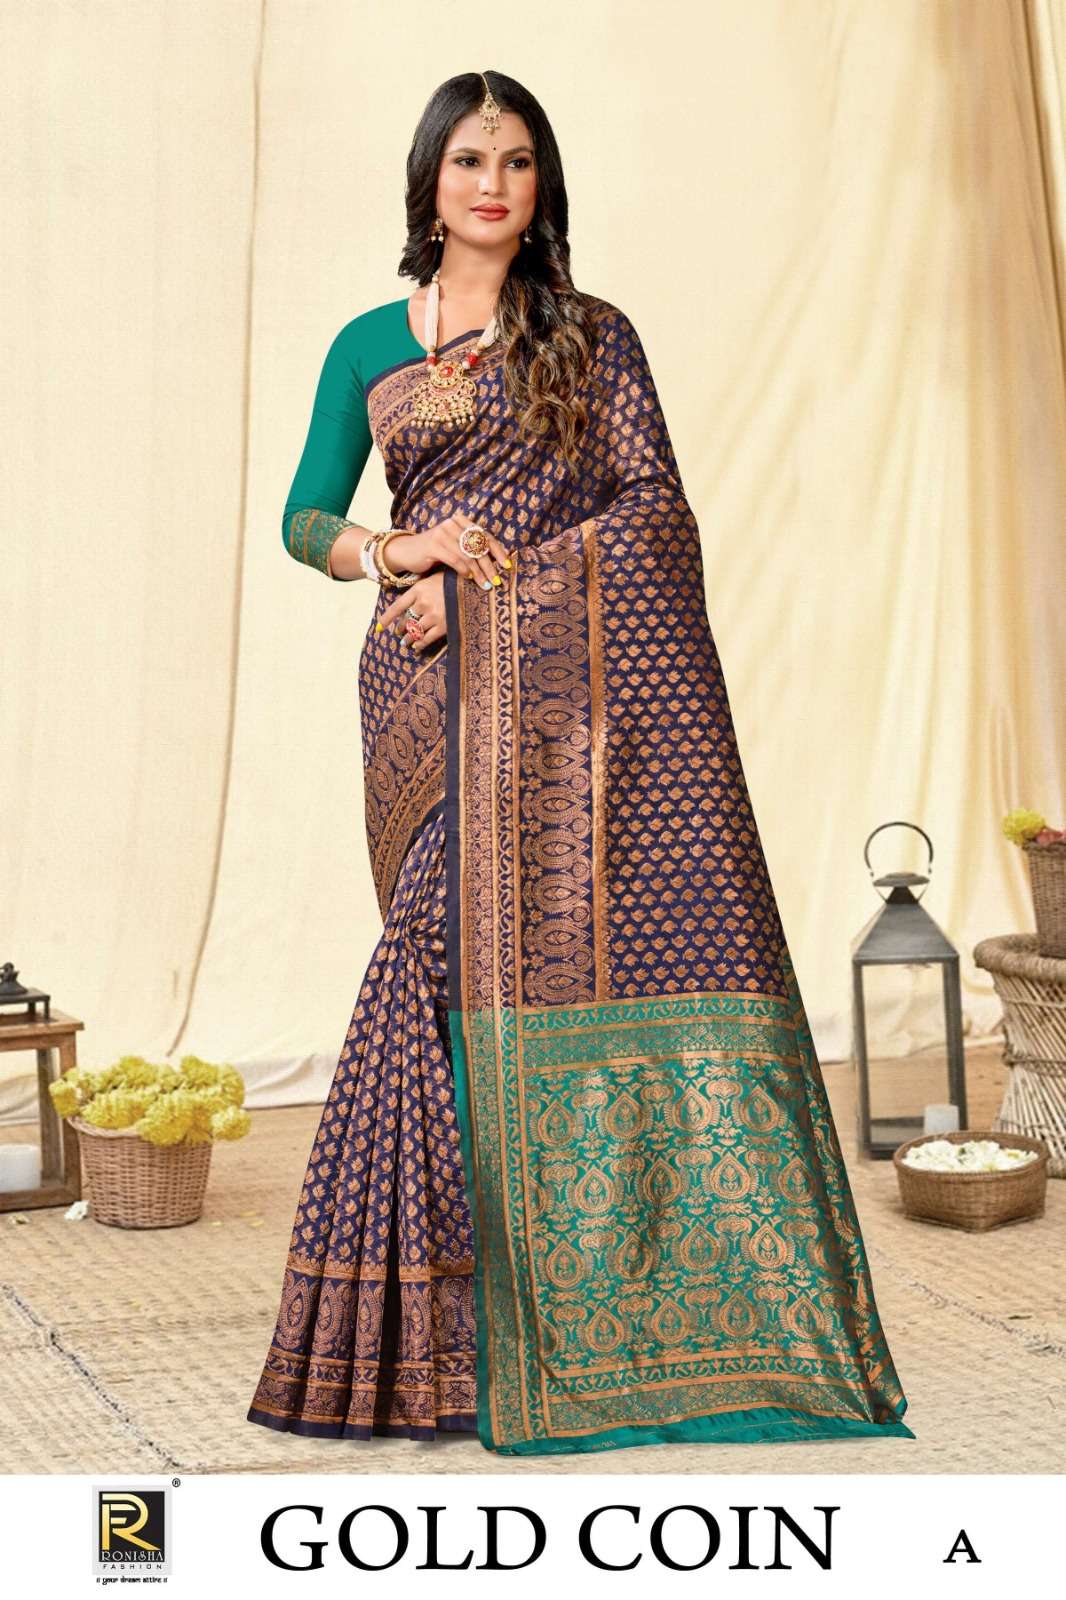 Ronisha Gold cion Banarasi Silk Saree Wholesale catalog